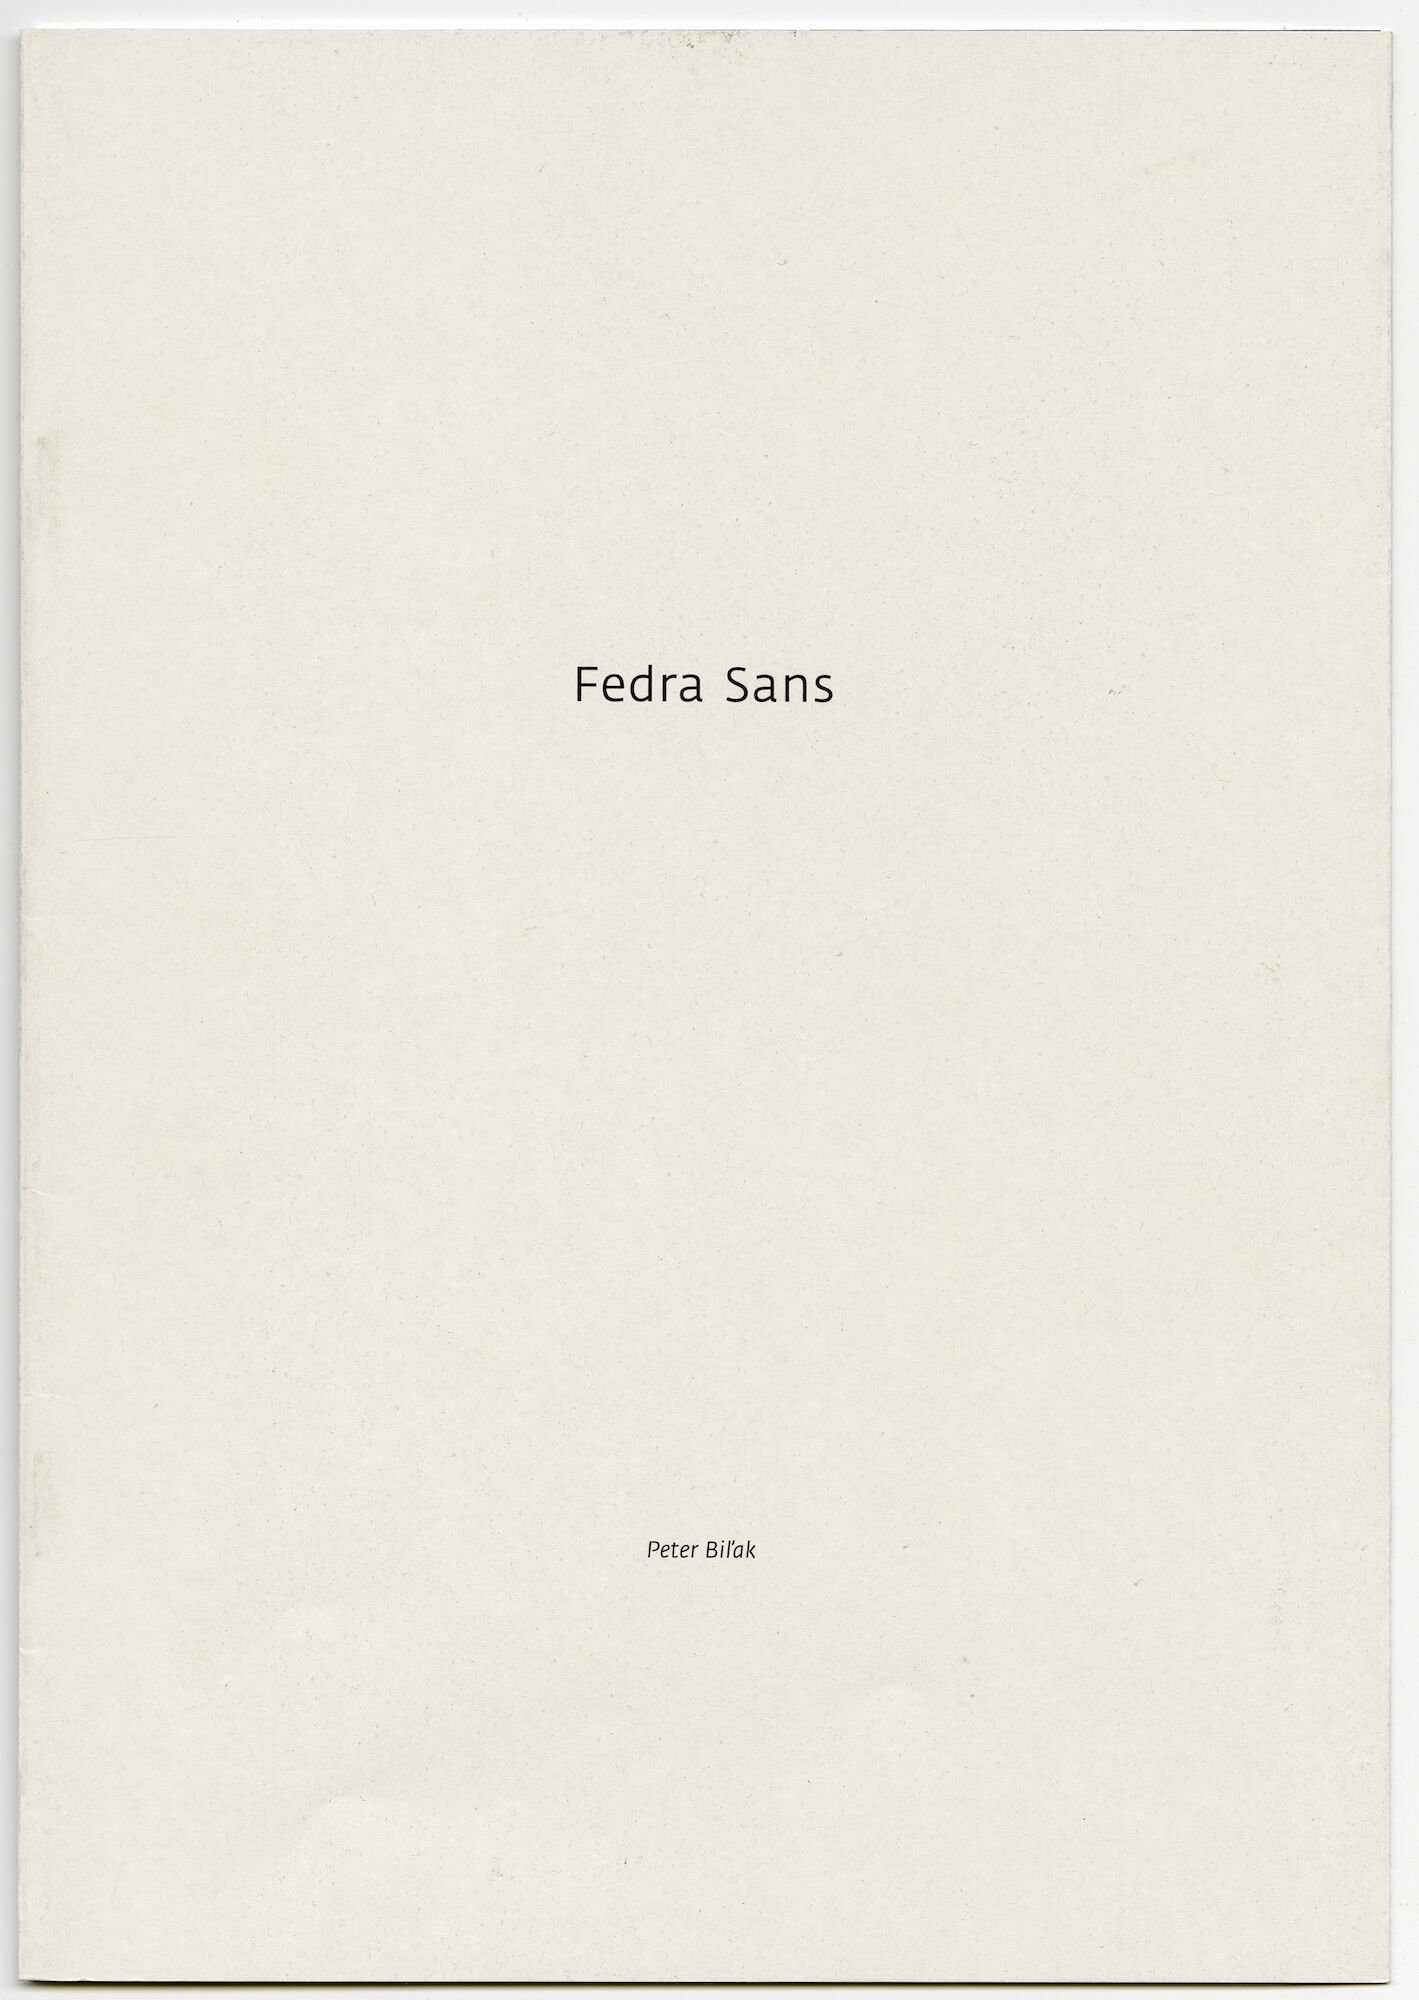 Letterproef met het lettertype Fedra Sans